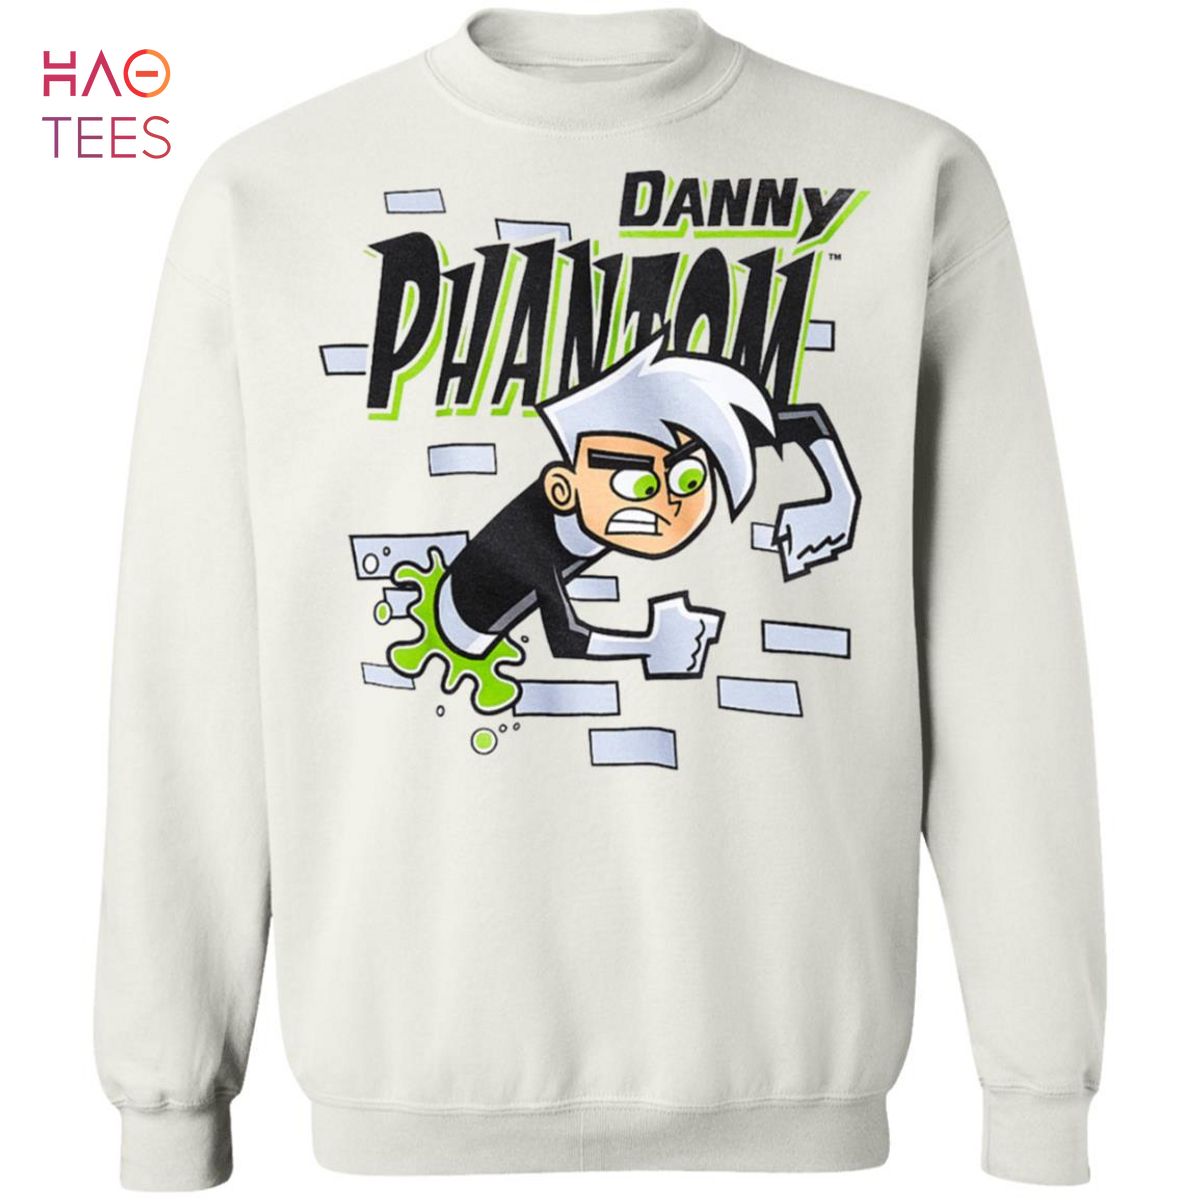 HOT Danny Phantom Sweater